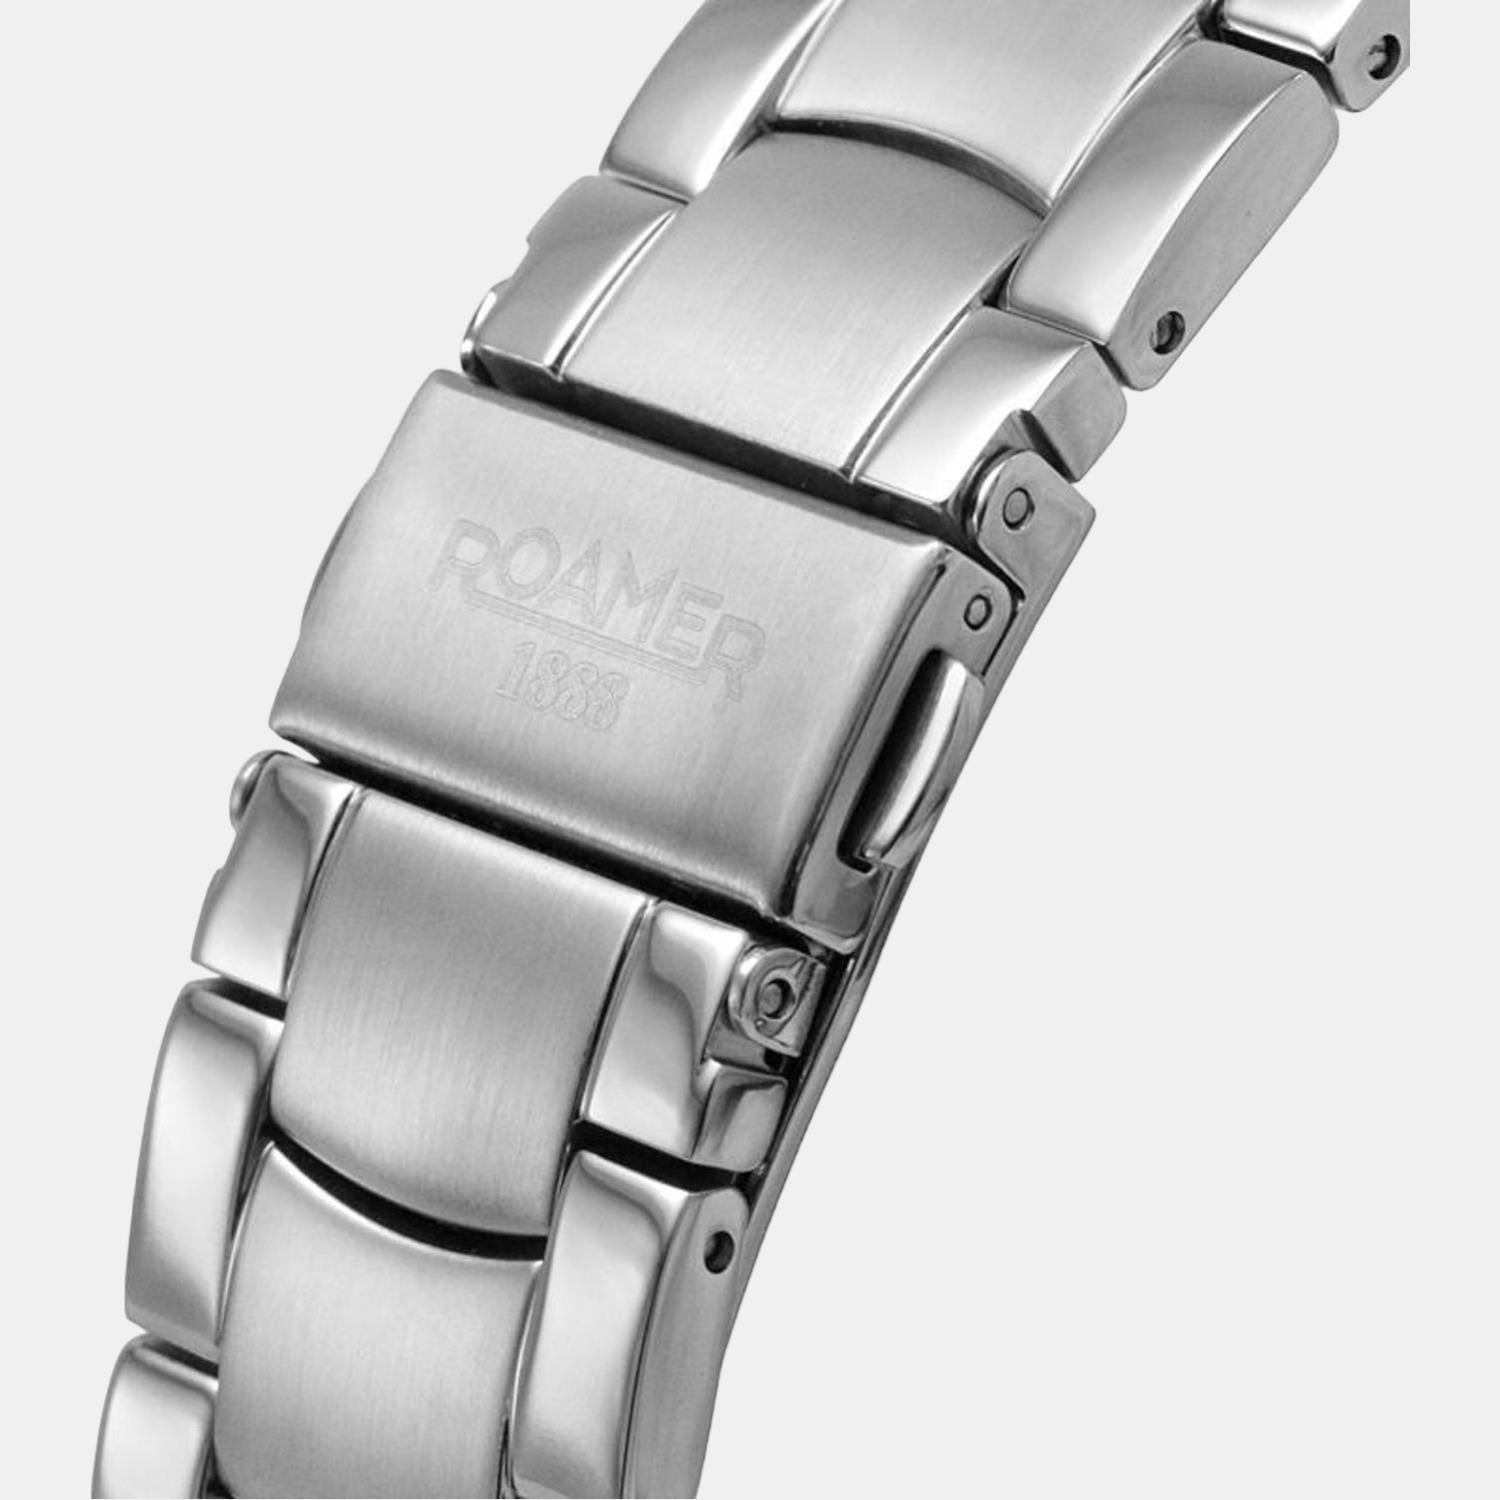 roamer-stainless-steel-silver-analog-male-watch-703660-49-65-50